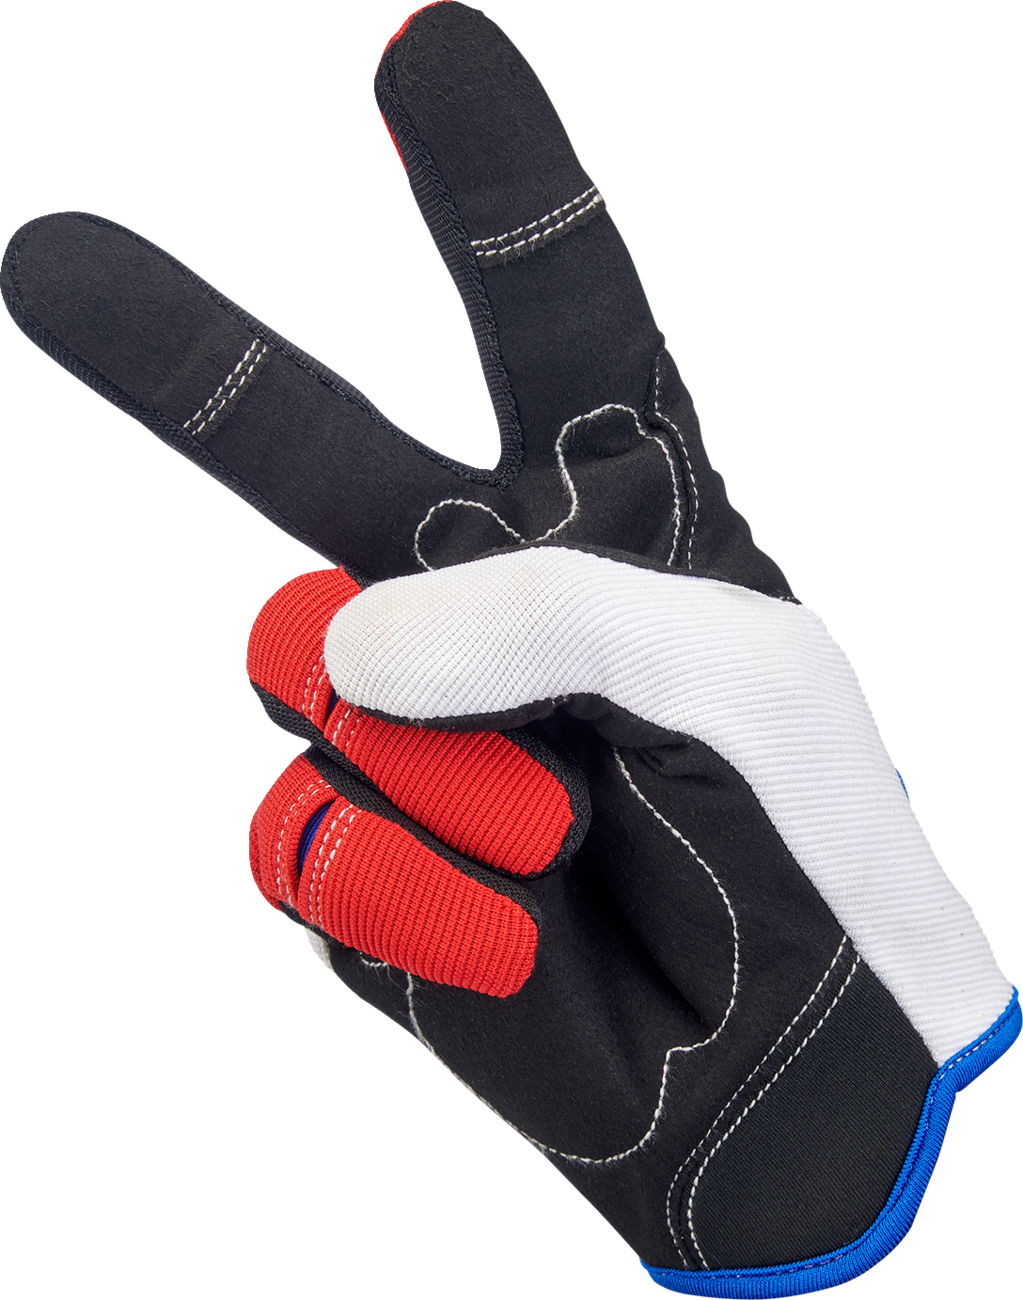 BILTWELL Moto Gloves - Red/White/Blue - Medium 1501-1208-003